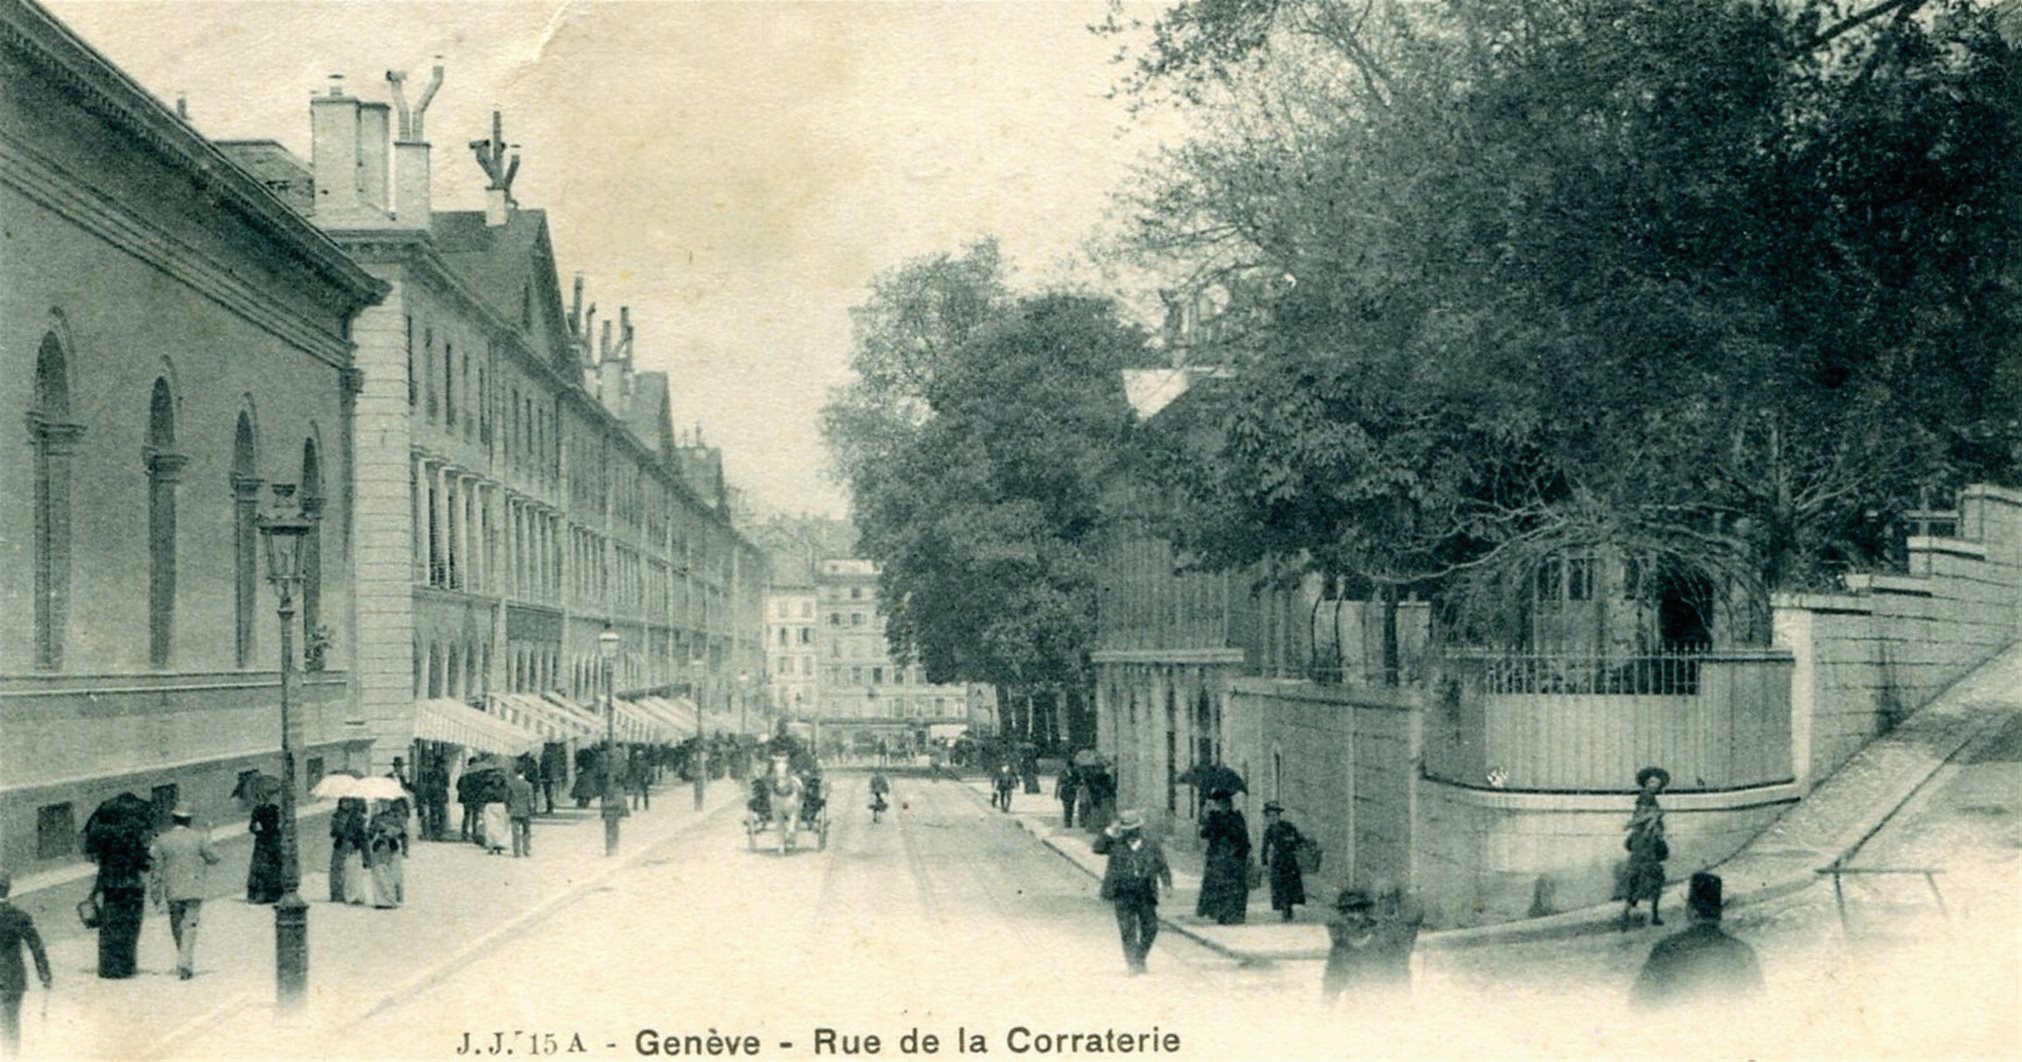 Rue de la Corraterie